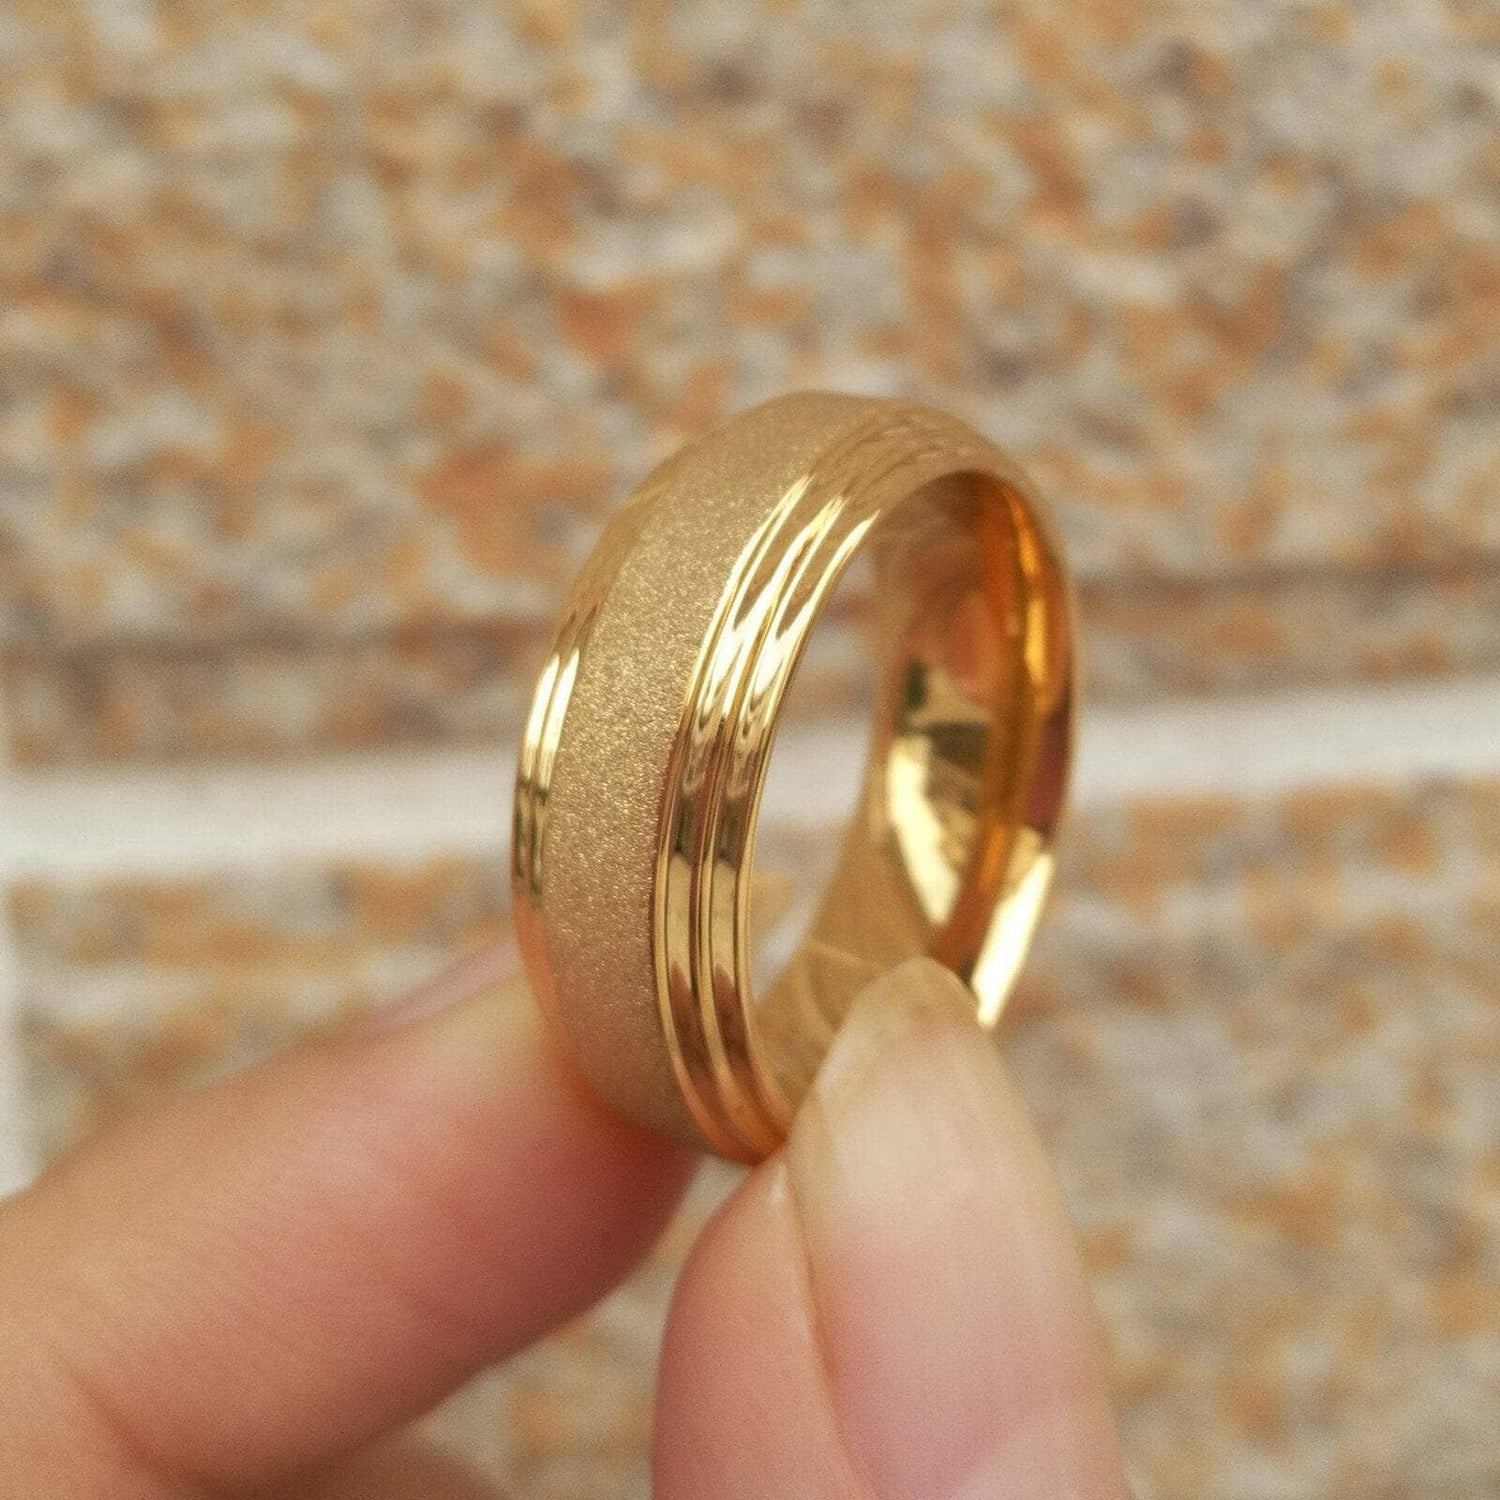 8mm Gold Tungsten Carbide Men's Wedding Rings-Black Diamonds New York